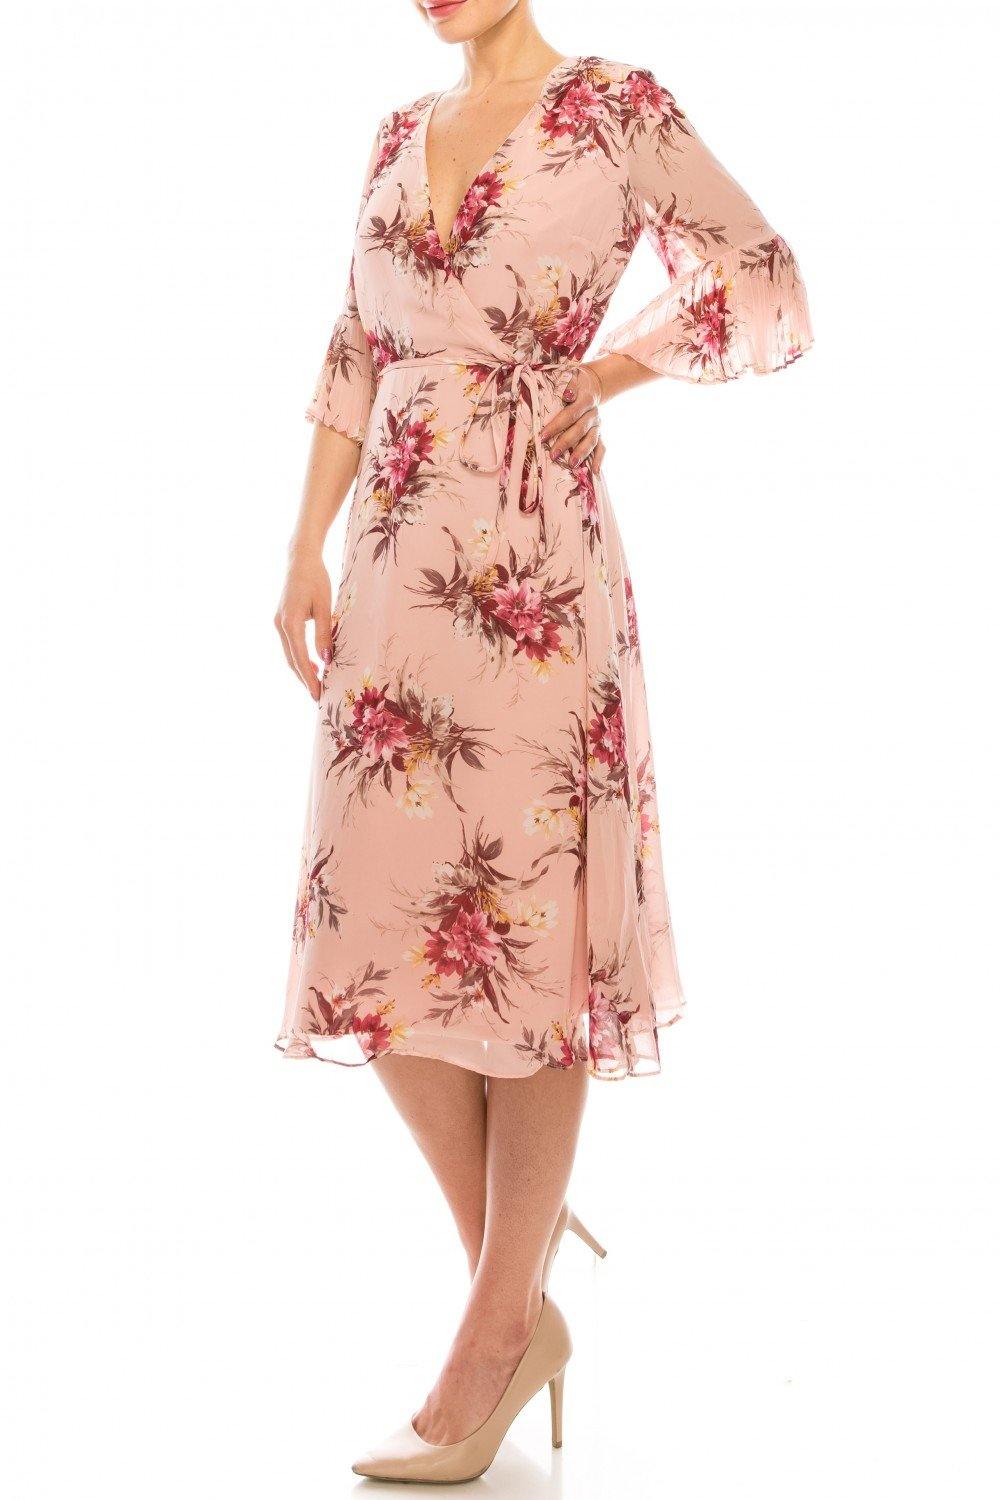 Sandra Darren Floral Printed Midi Faux Wrap Dress - The Dress Outlet